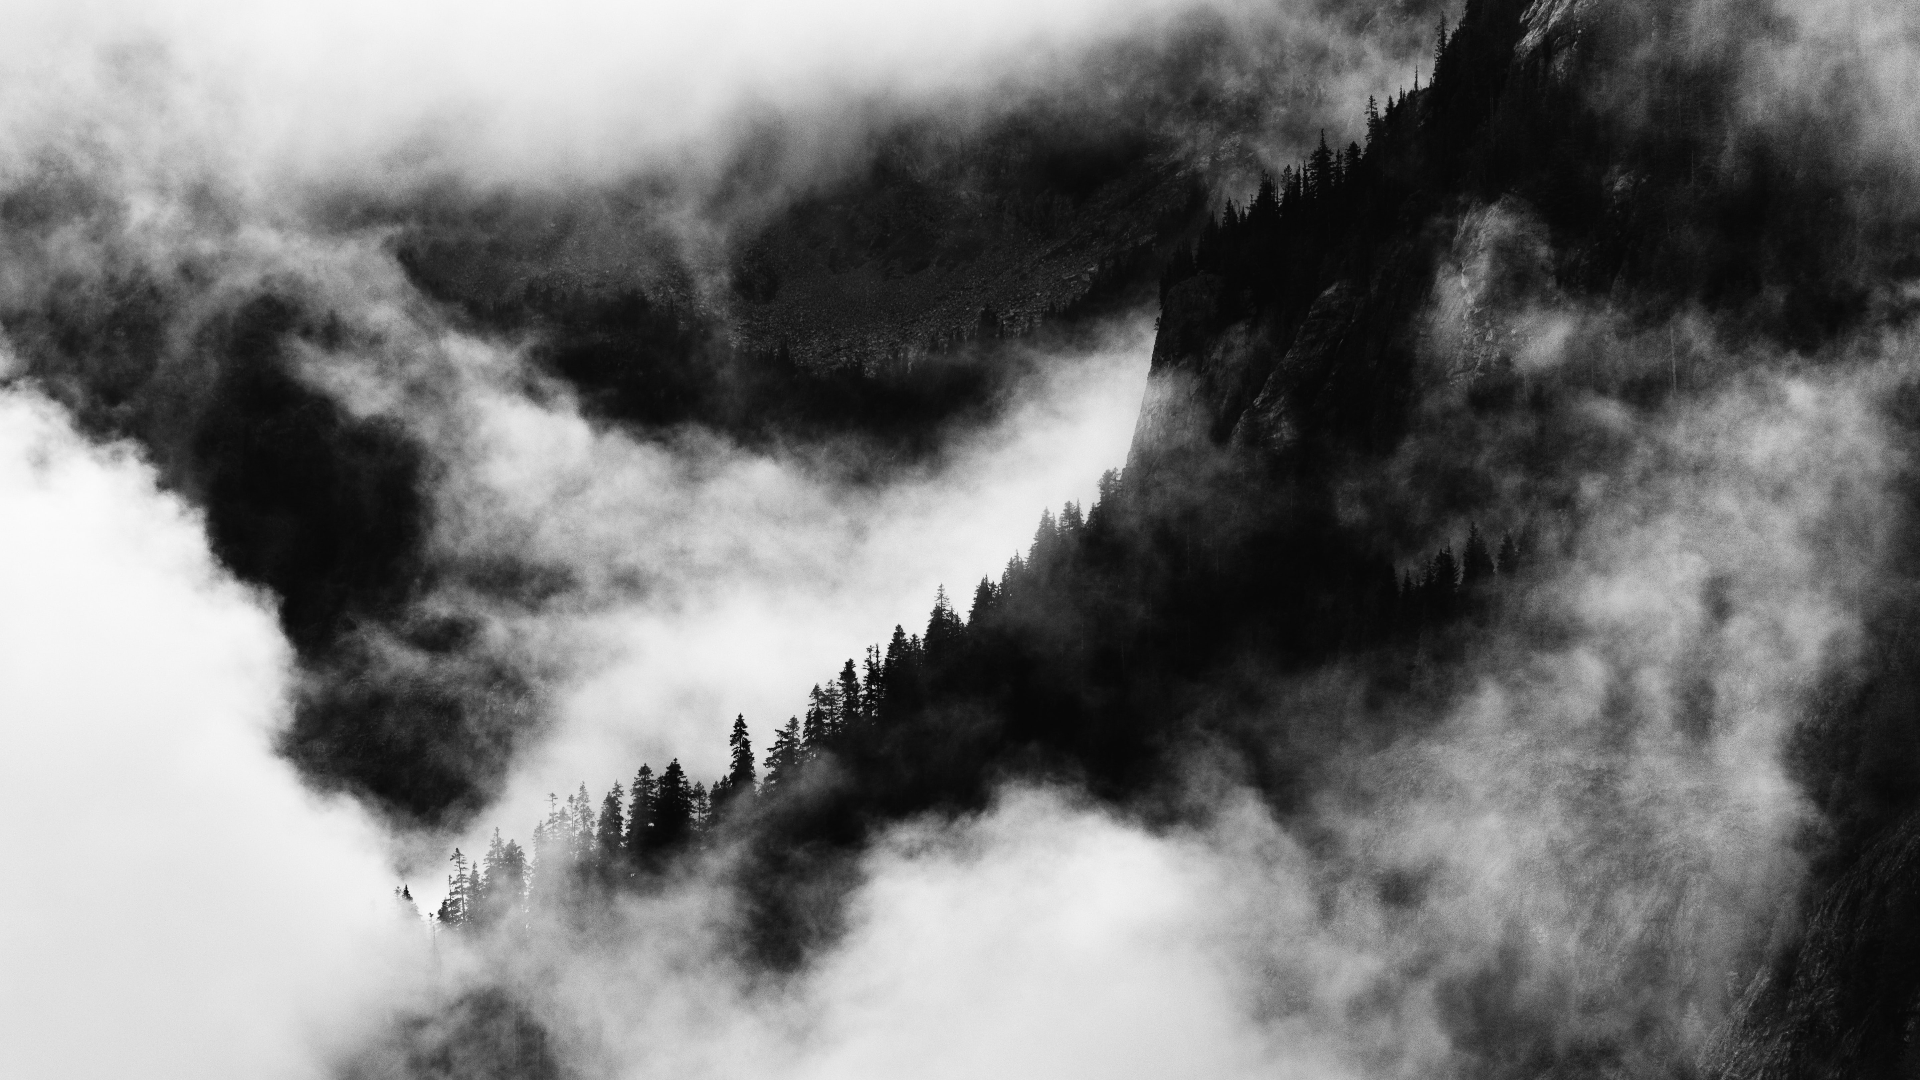 General 1920x1080 nature clouds mist trees mountains monochrome Washington USA